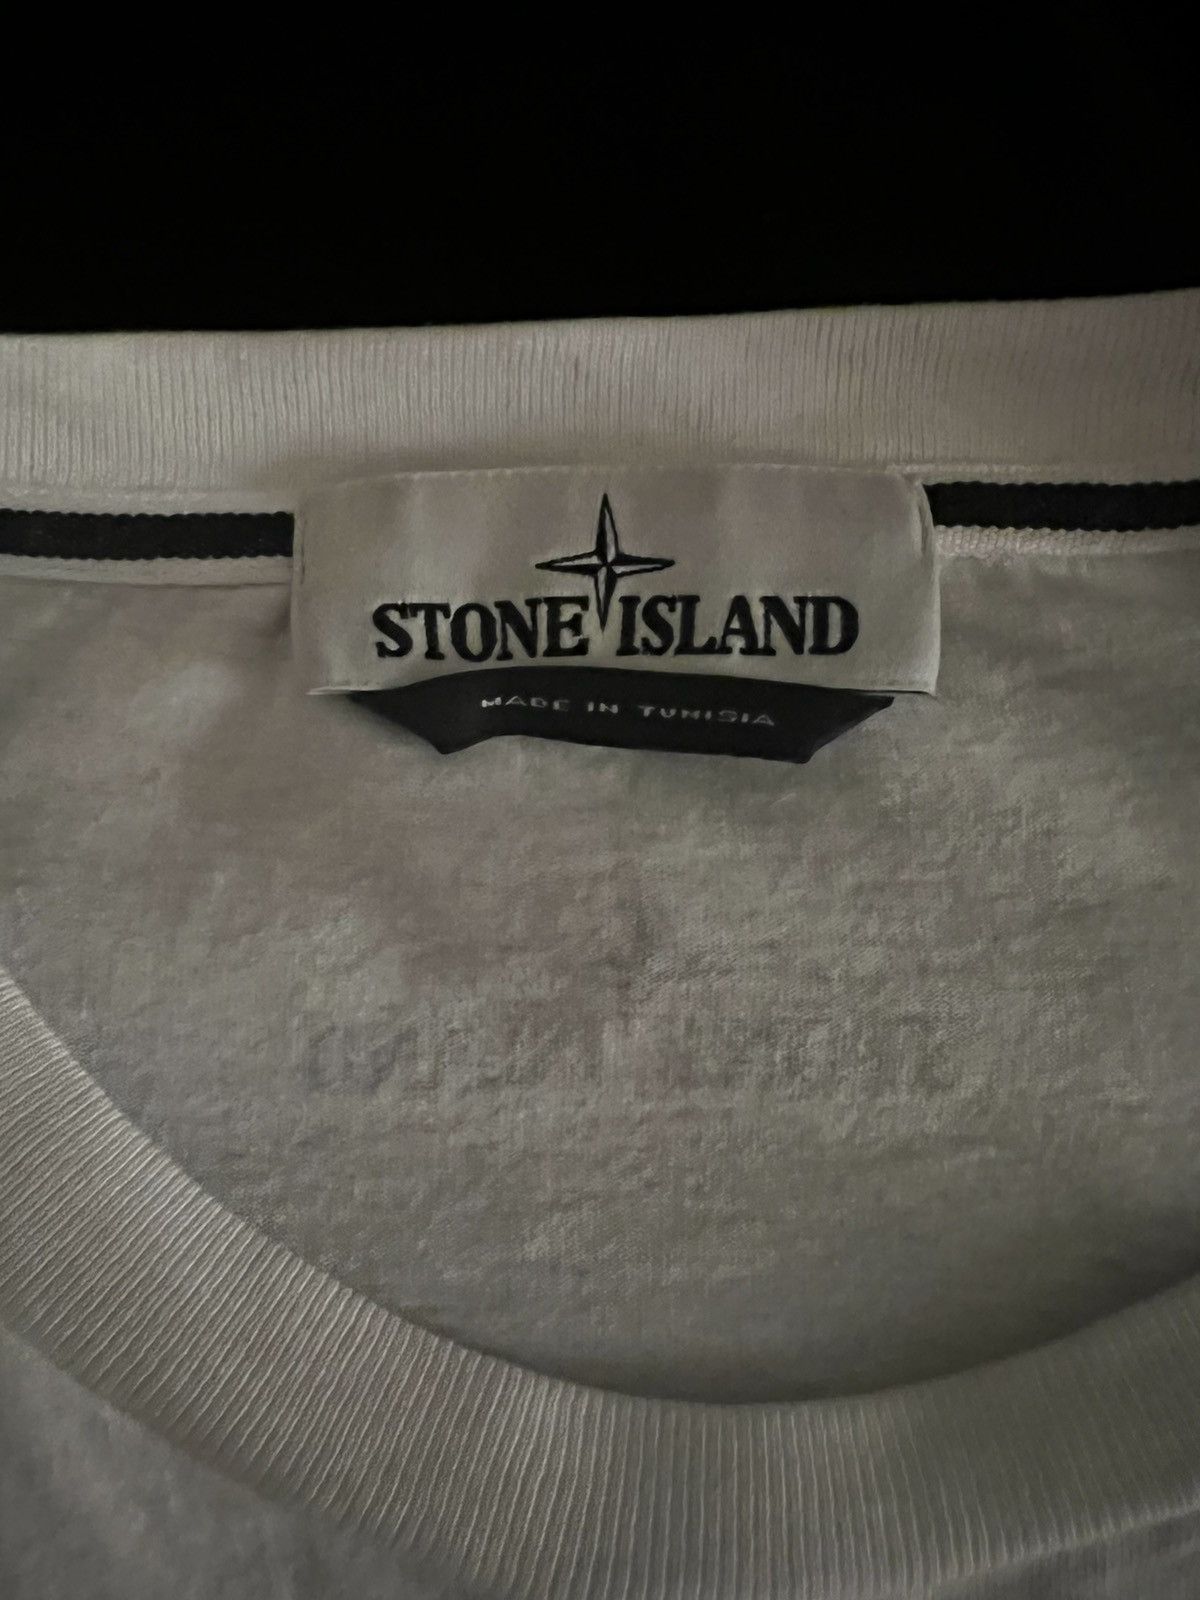 Stone Island Stone island T-shirt Size US S / EU 44-46 / 1 - 6 Thumbnail